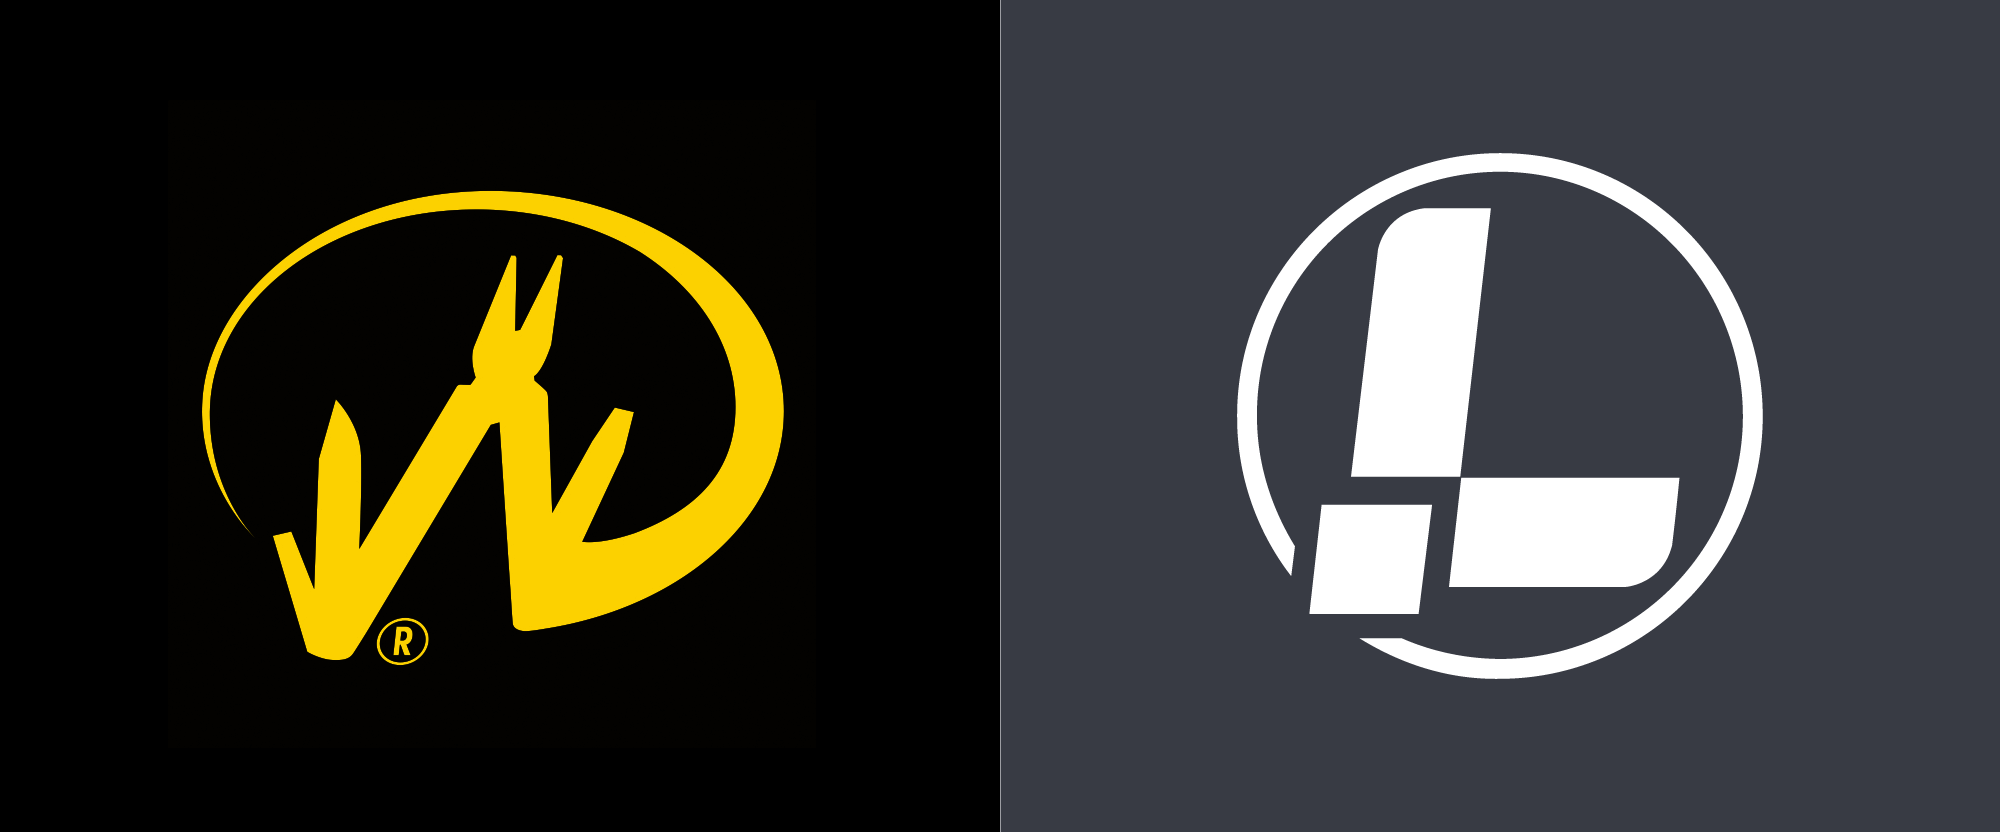 Leatherman Logo - Brand New: New Logo for Leatherman